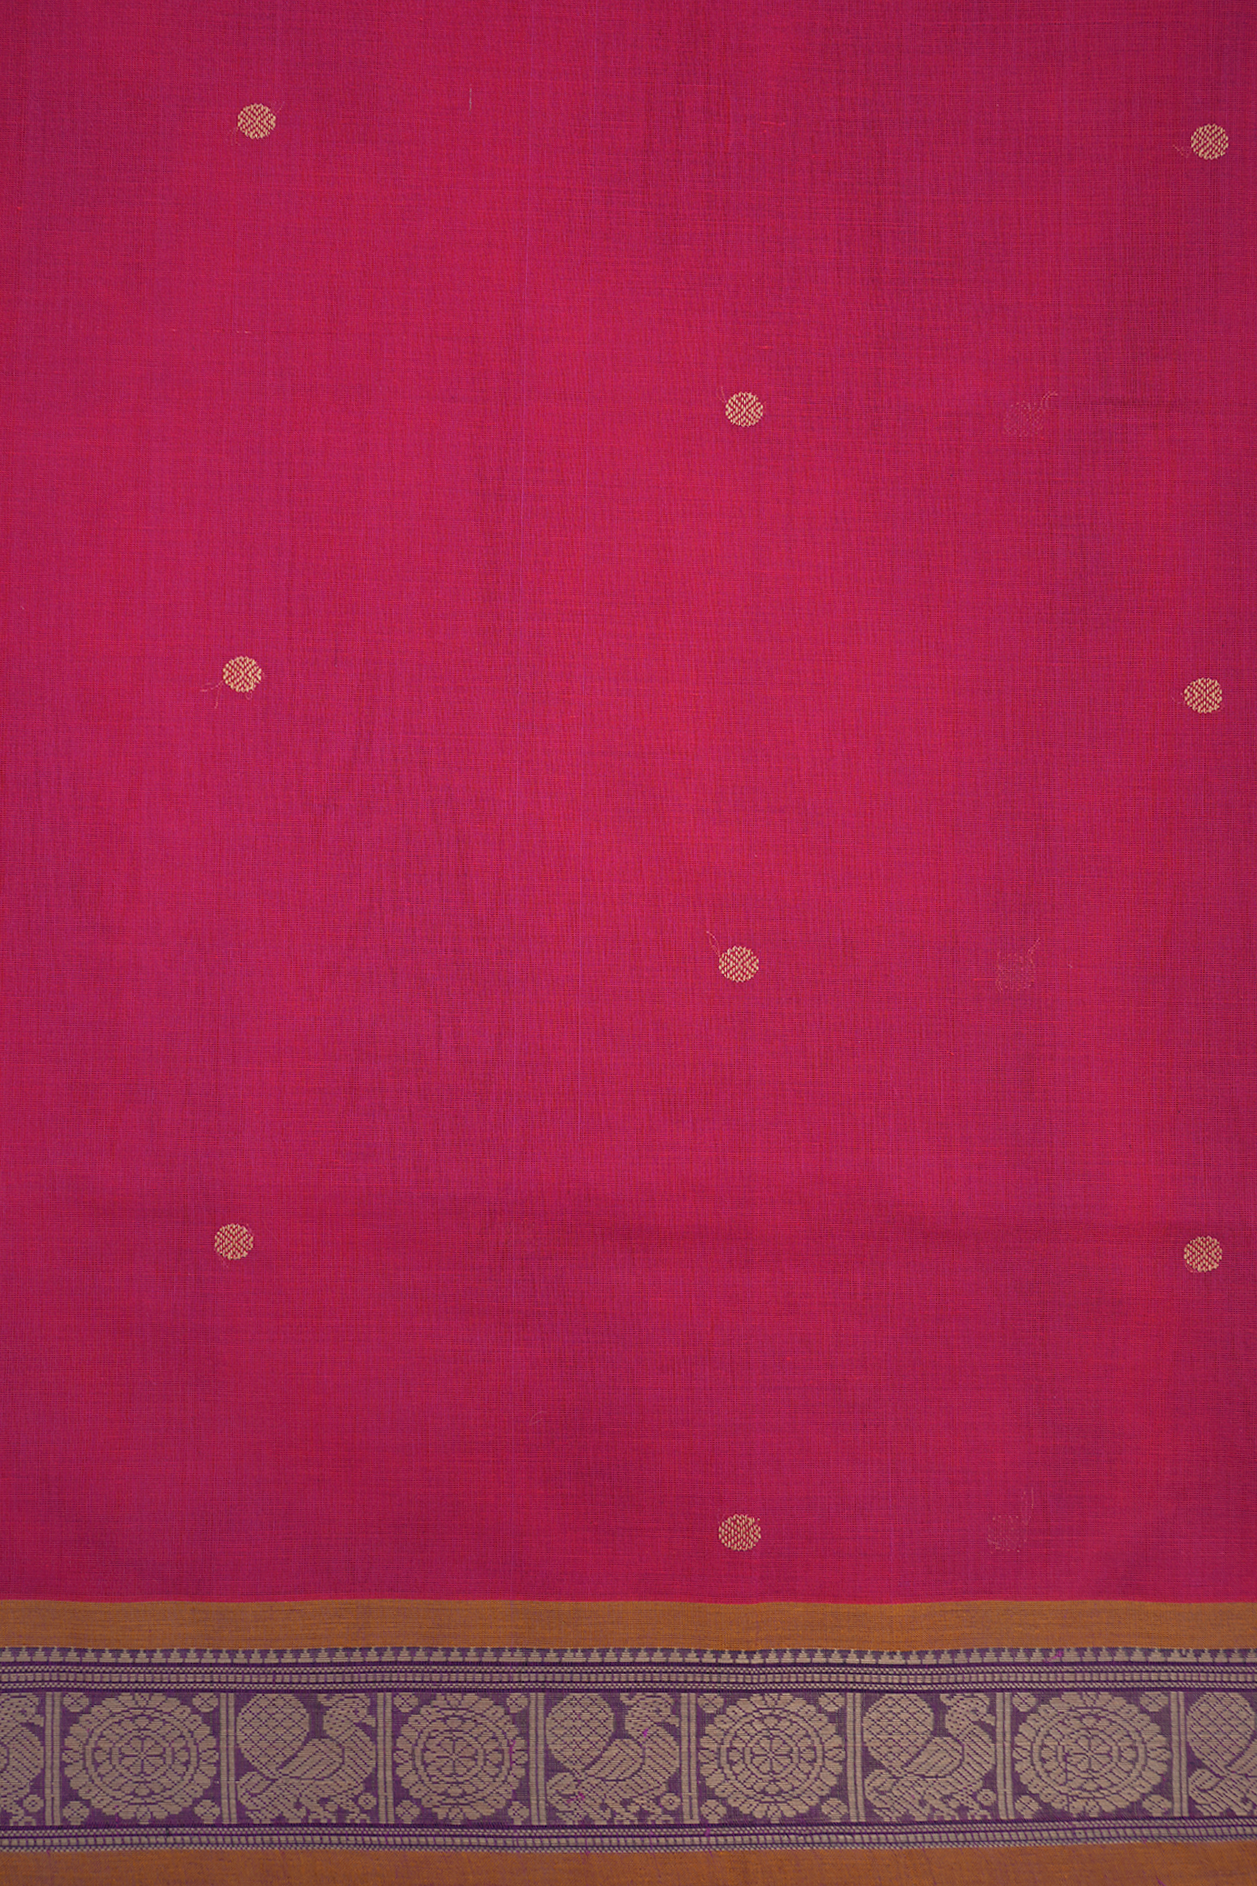 Rudraksh Motifs Rose Red Coimbatore Cotton Saree